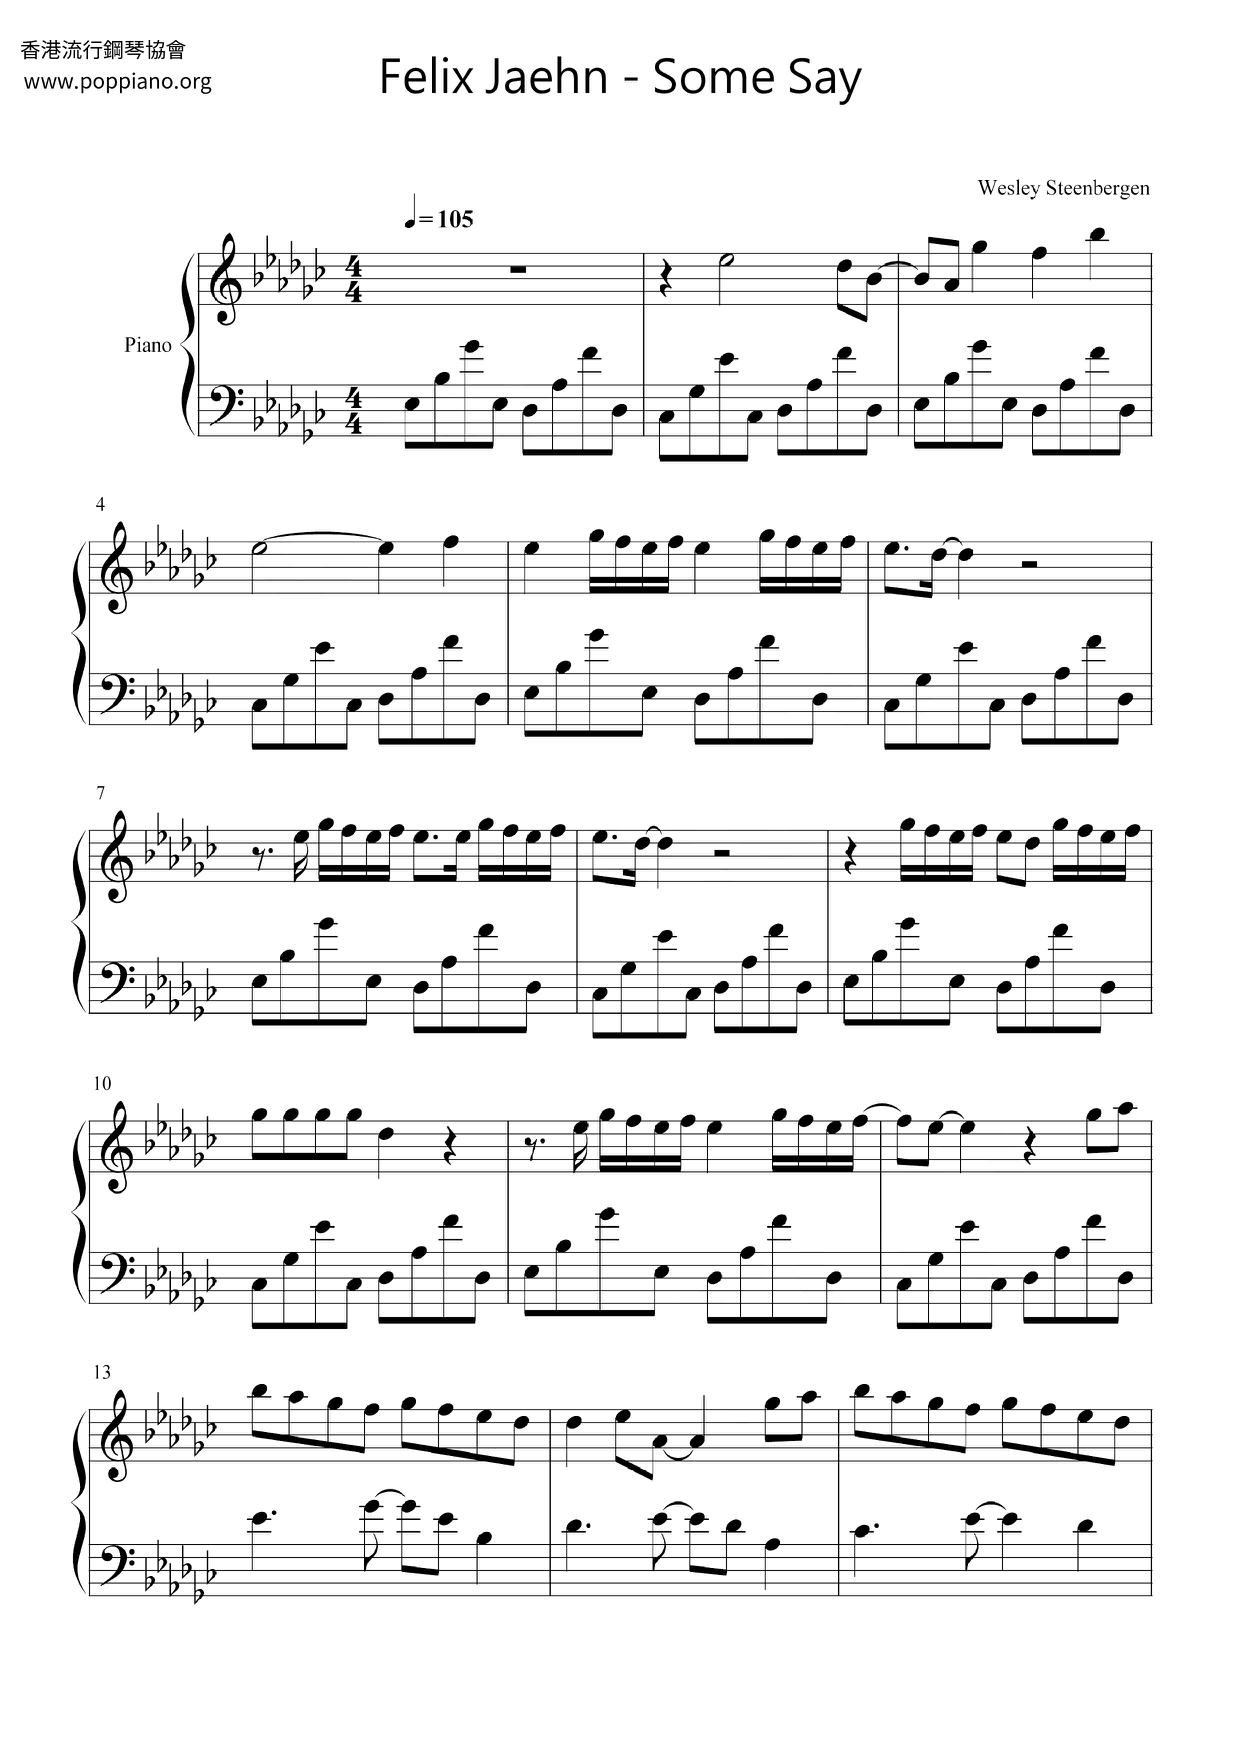 Some Sayピアノ譜